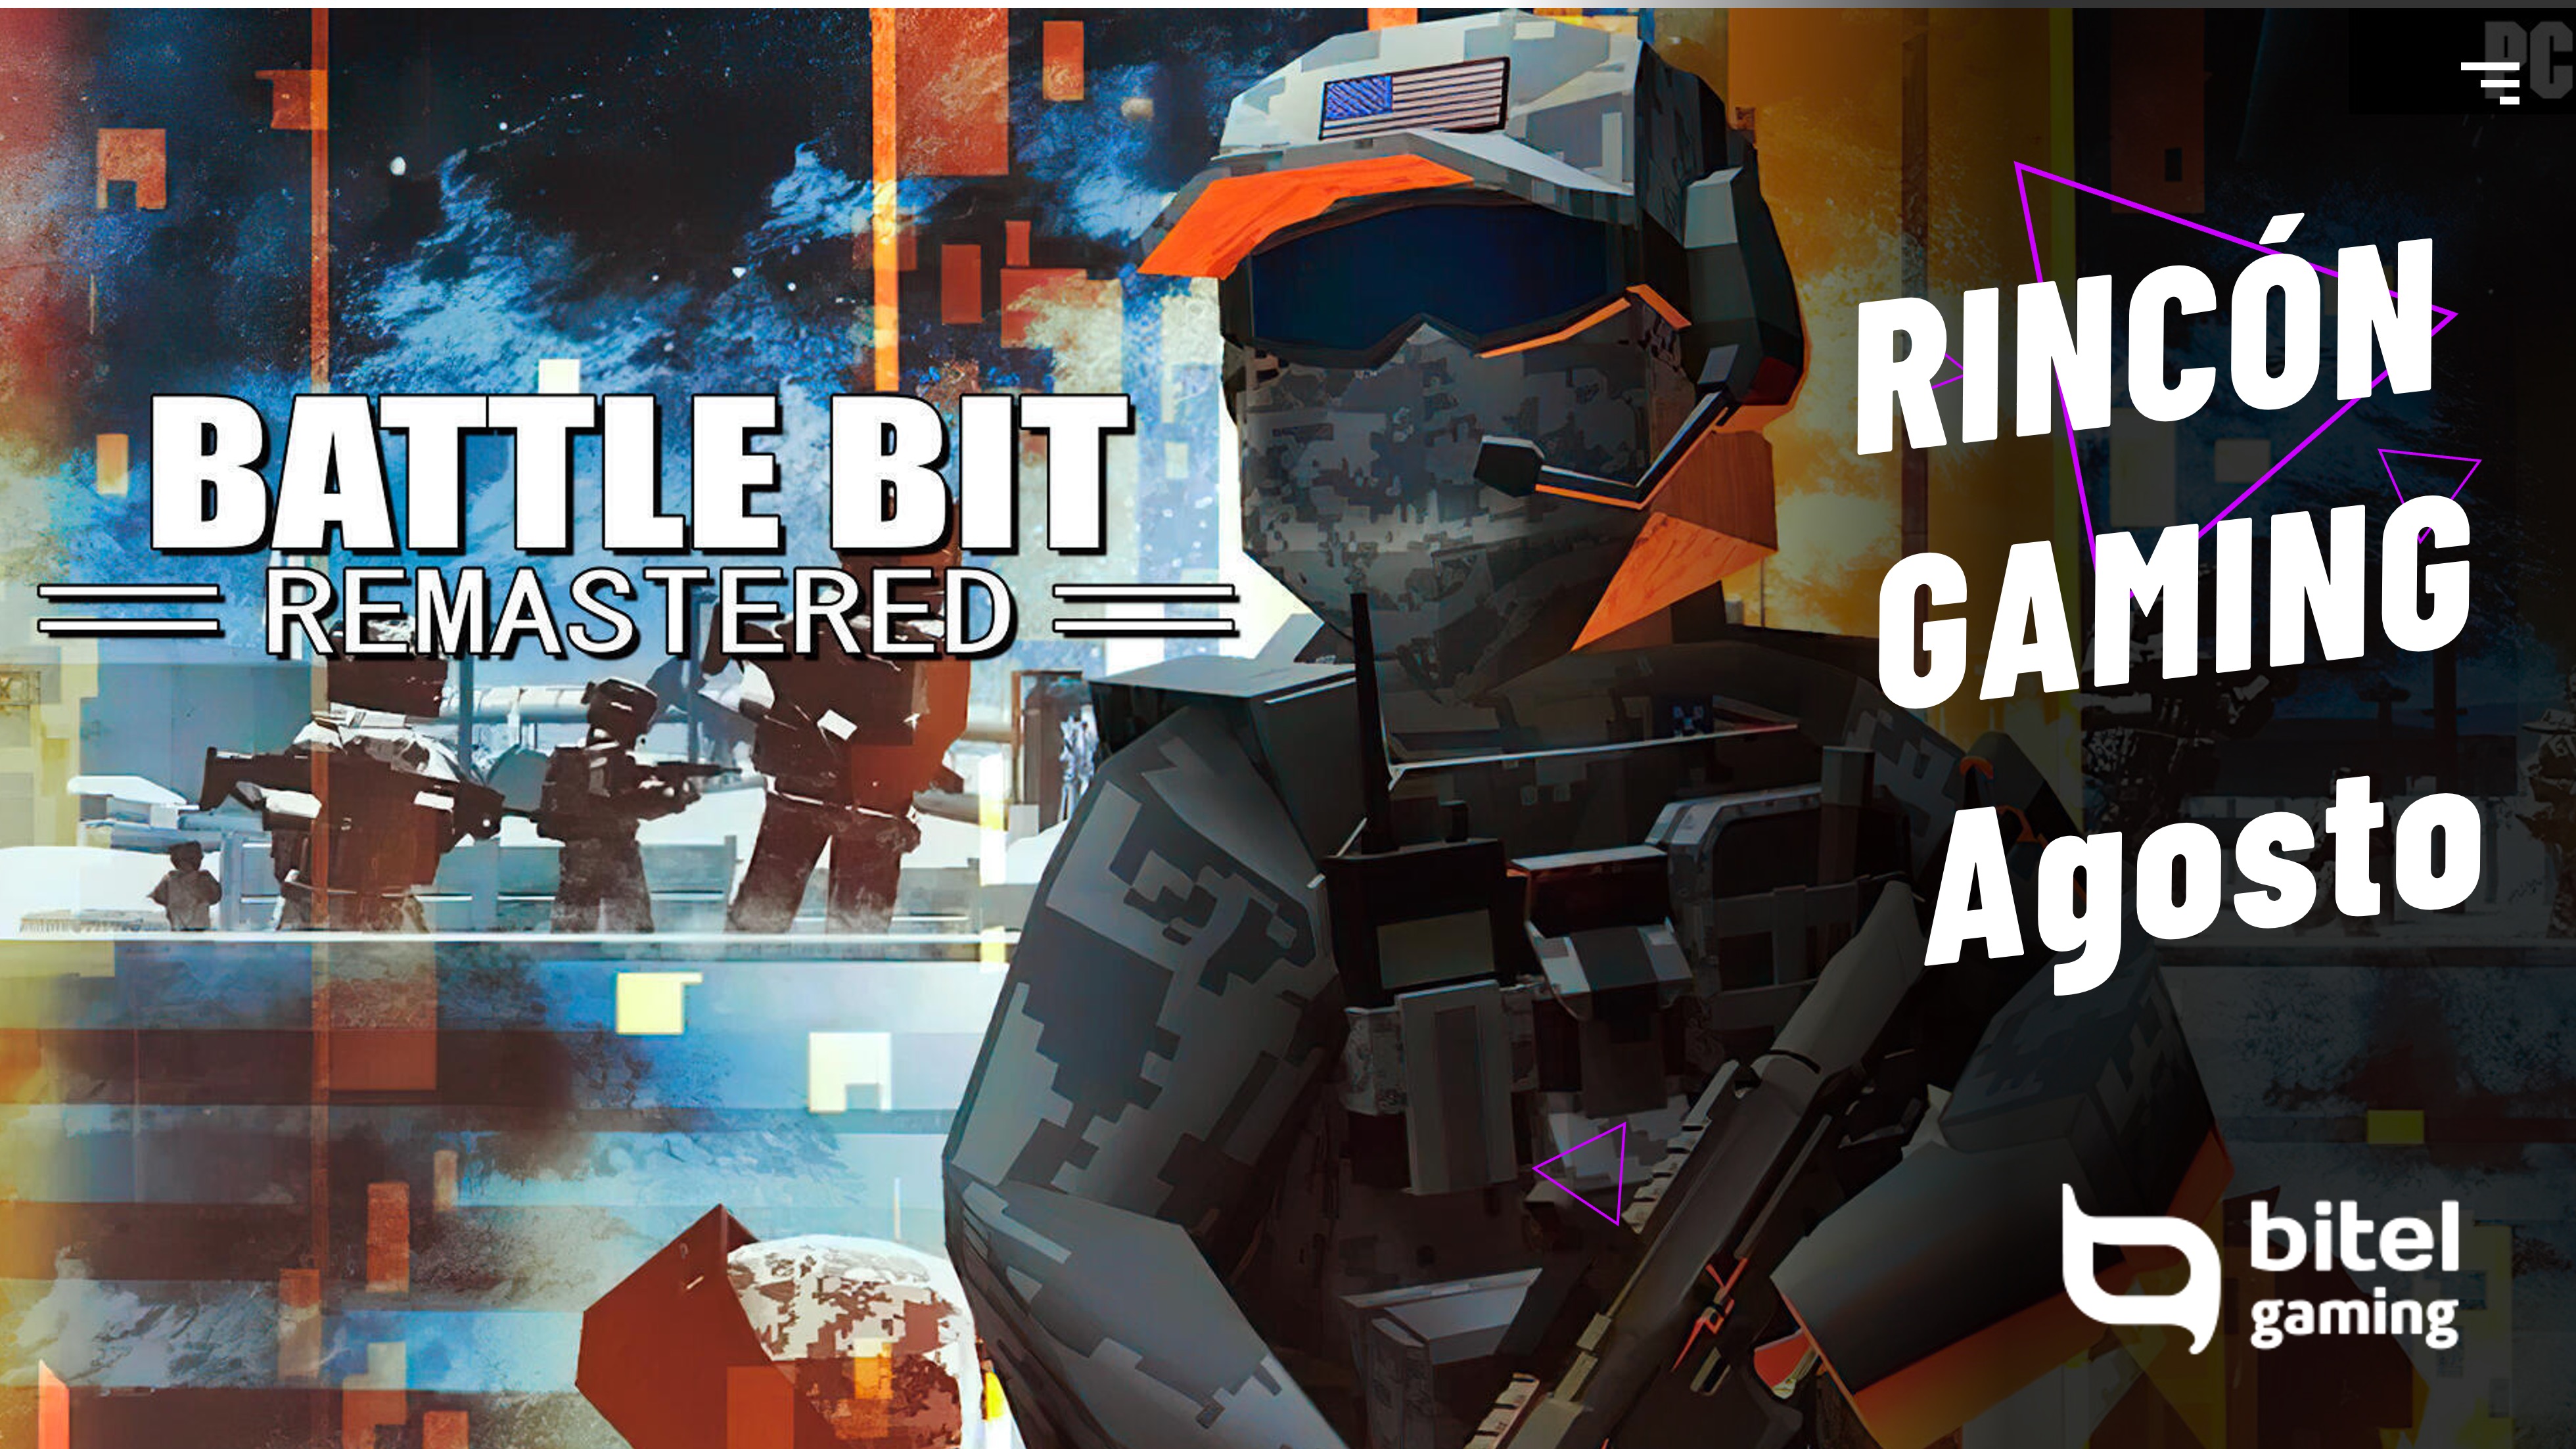 Rincon Gaming - Battlebit Remastered